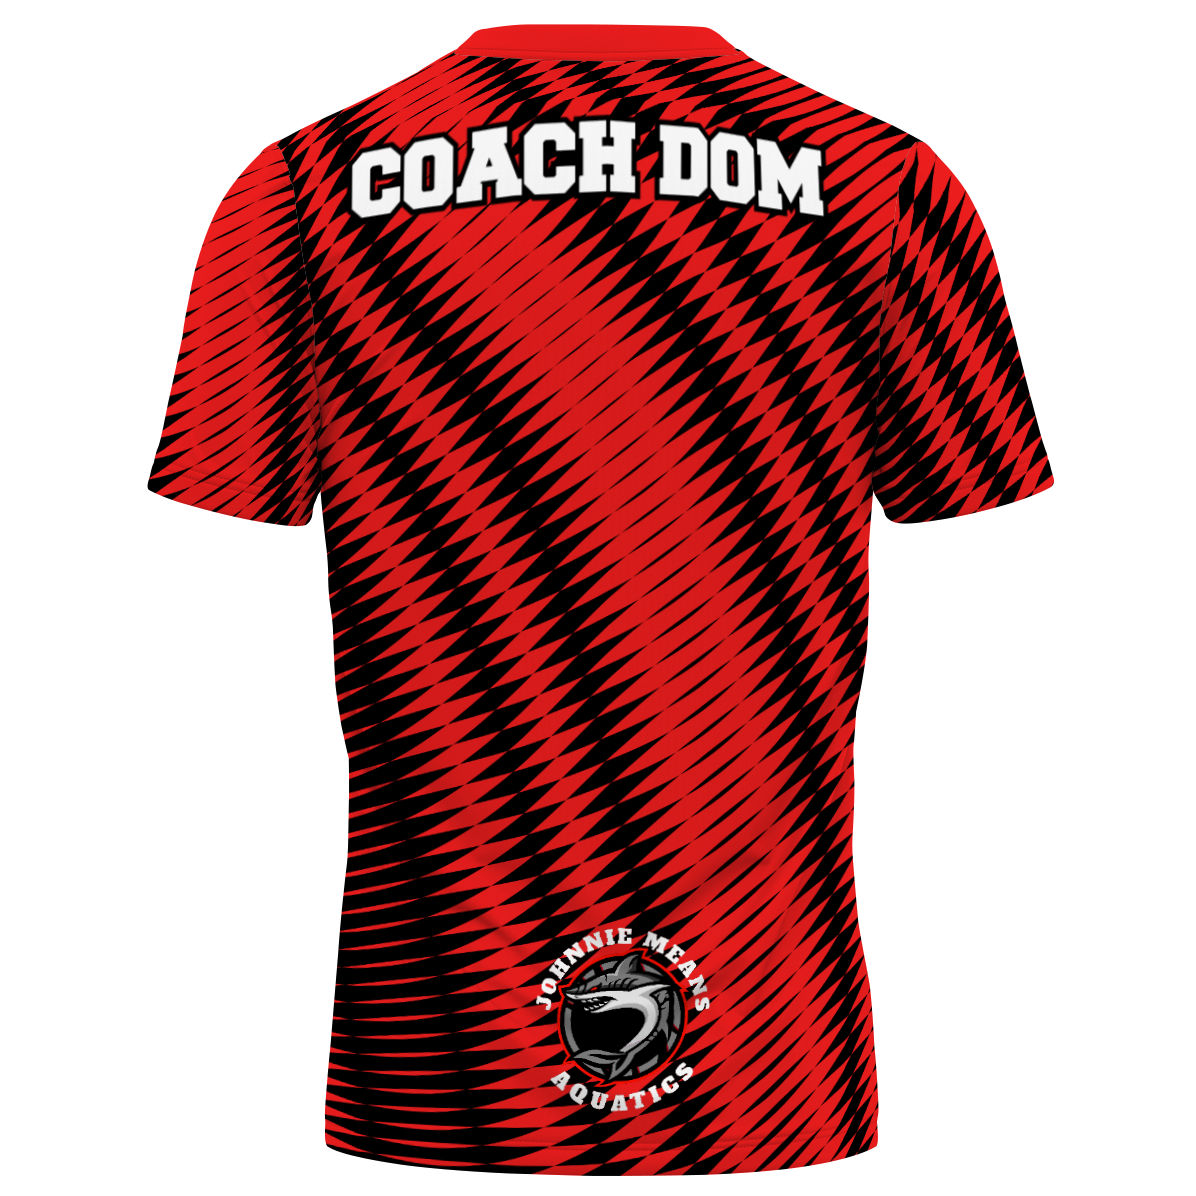 COACH DOM - Performance Shirt